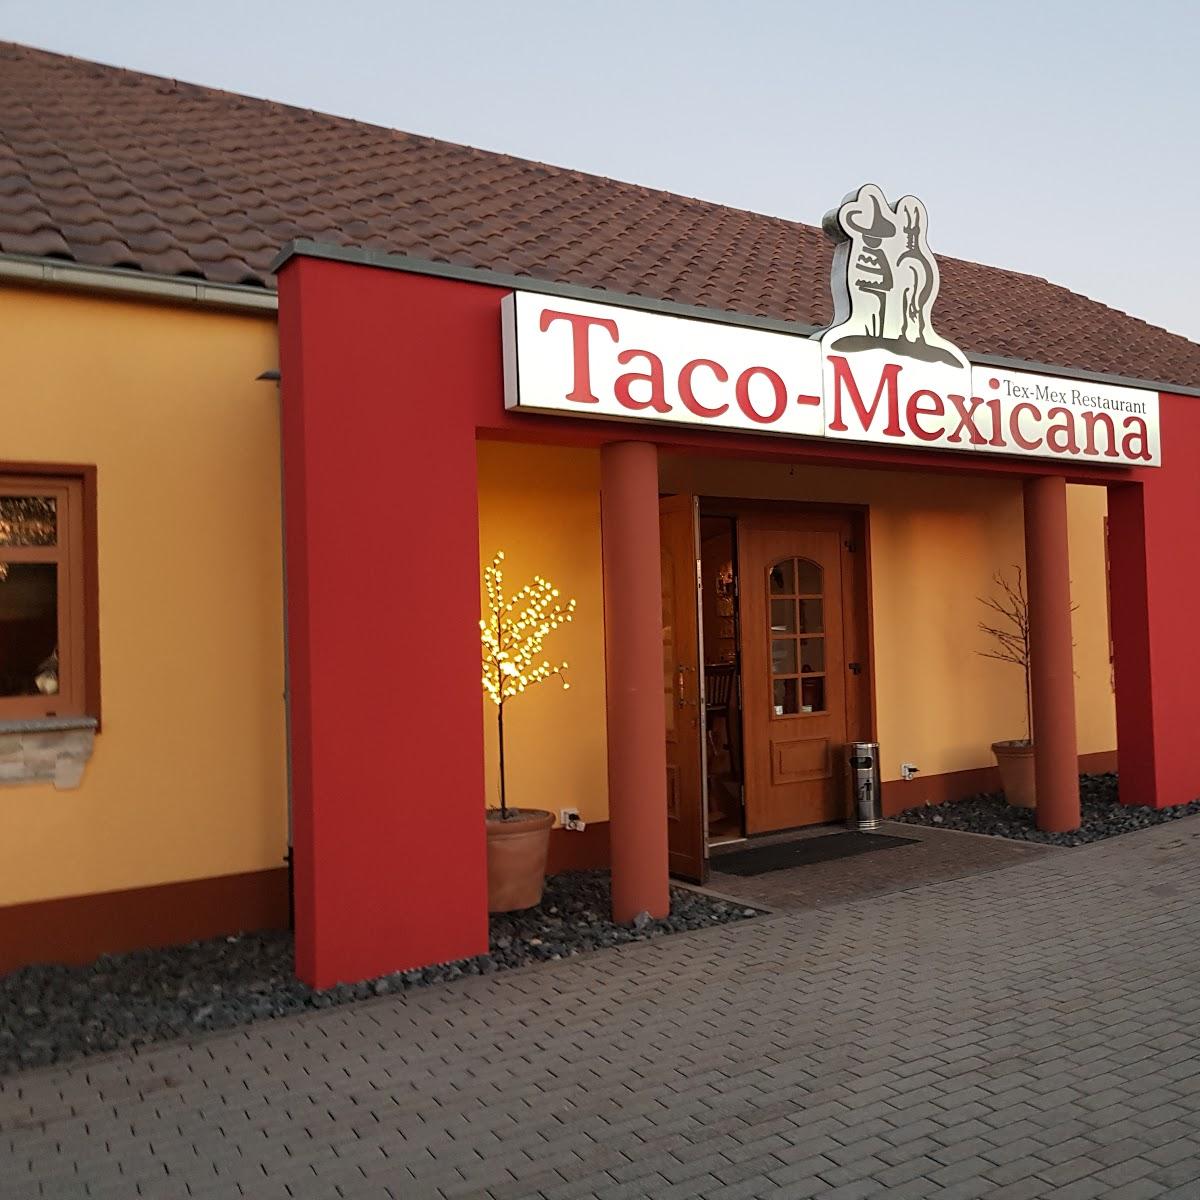 Restaurant "Taco-Mexicana" in  Siershahn